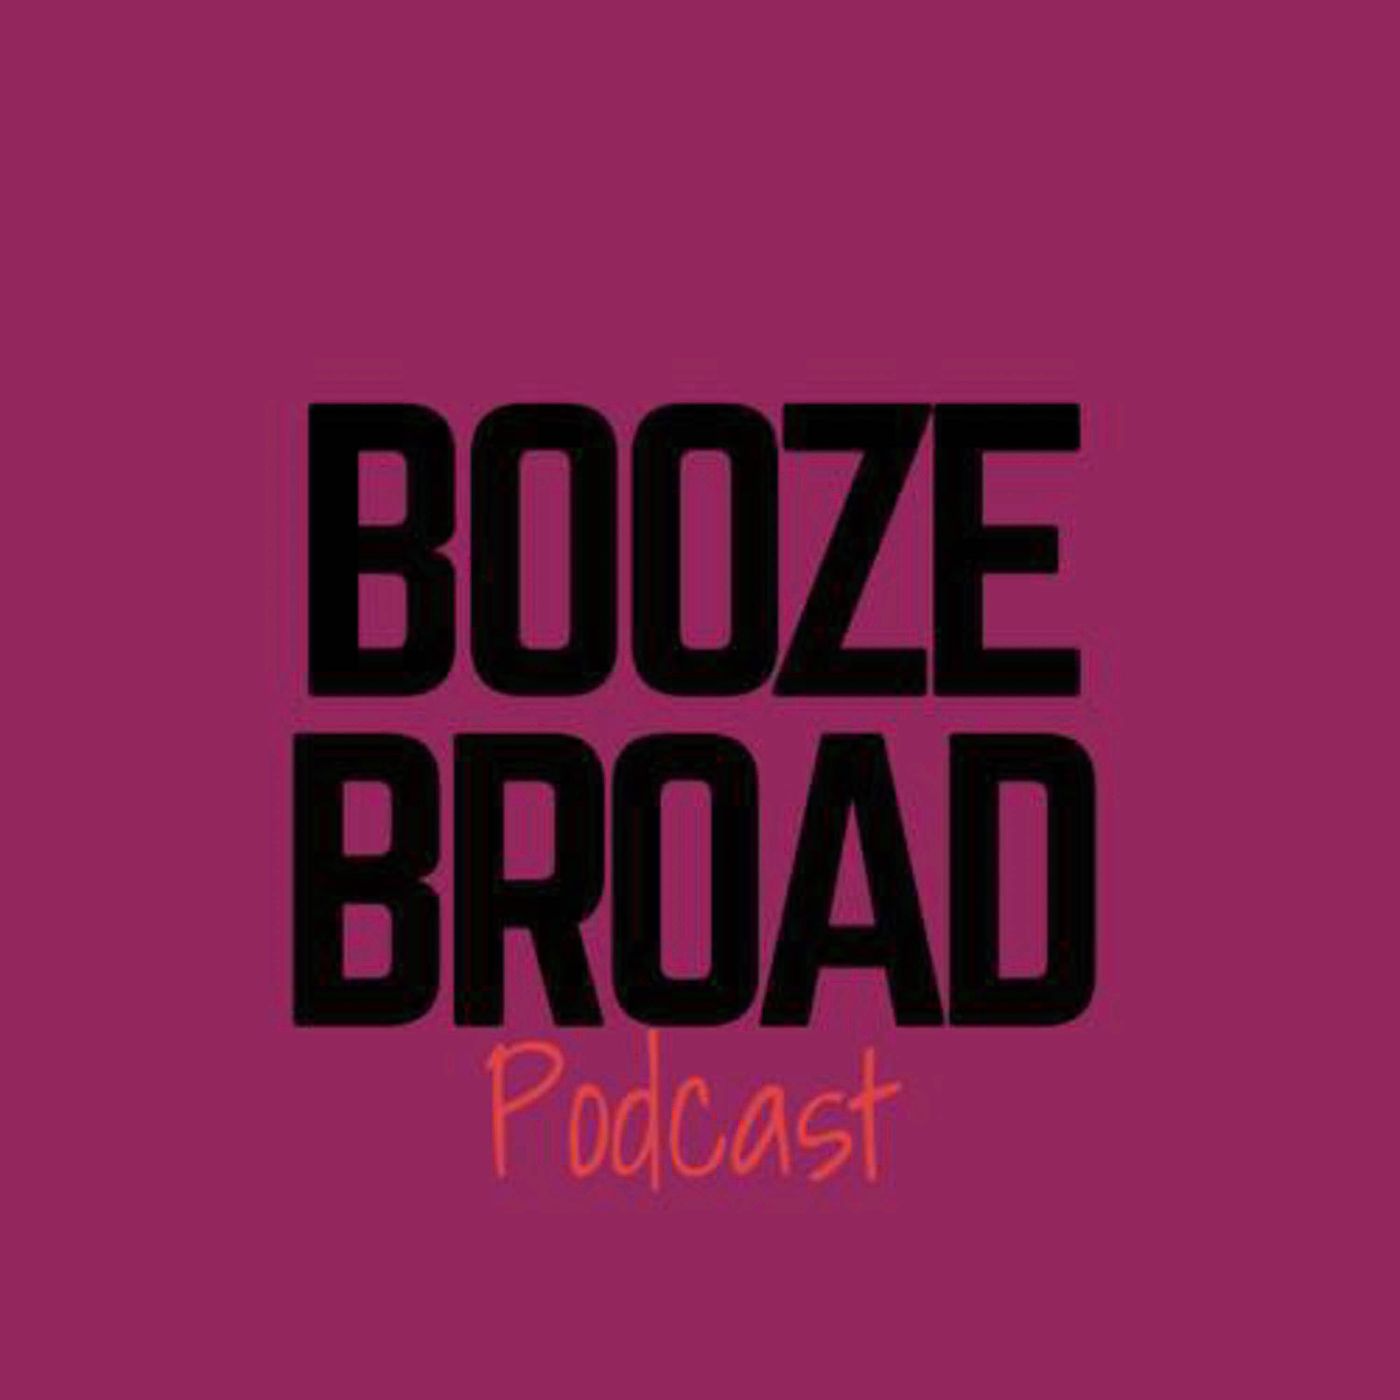 Booze Broad Podcast